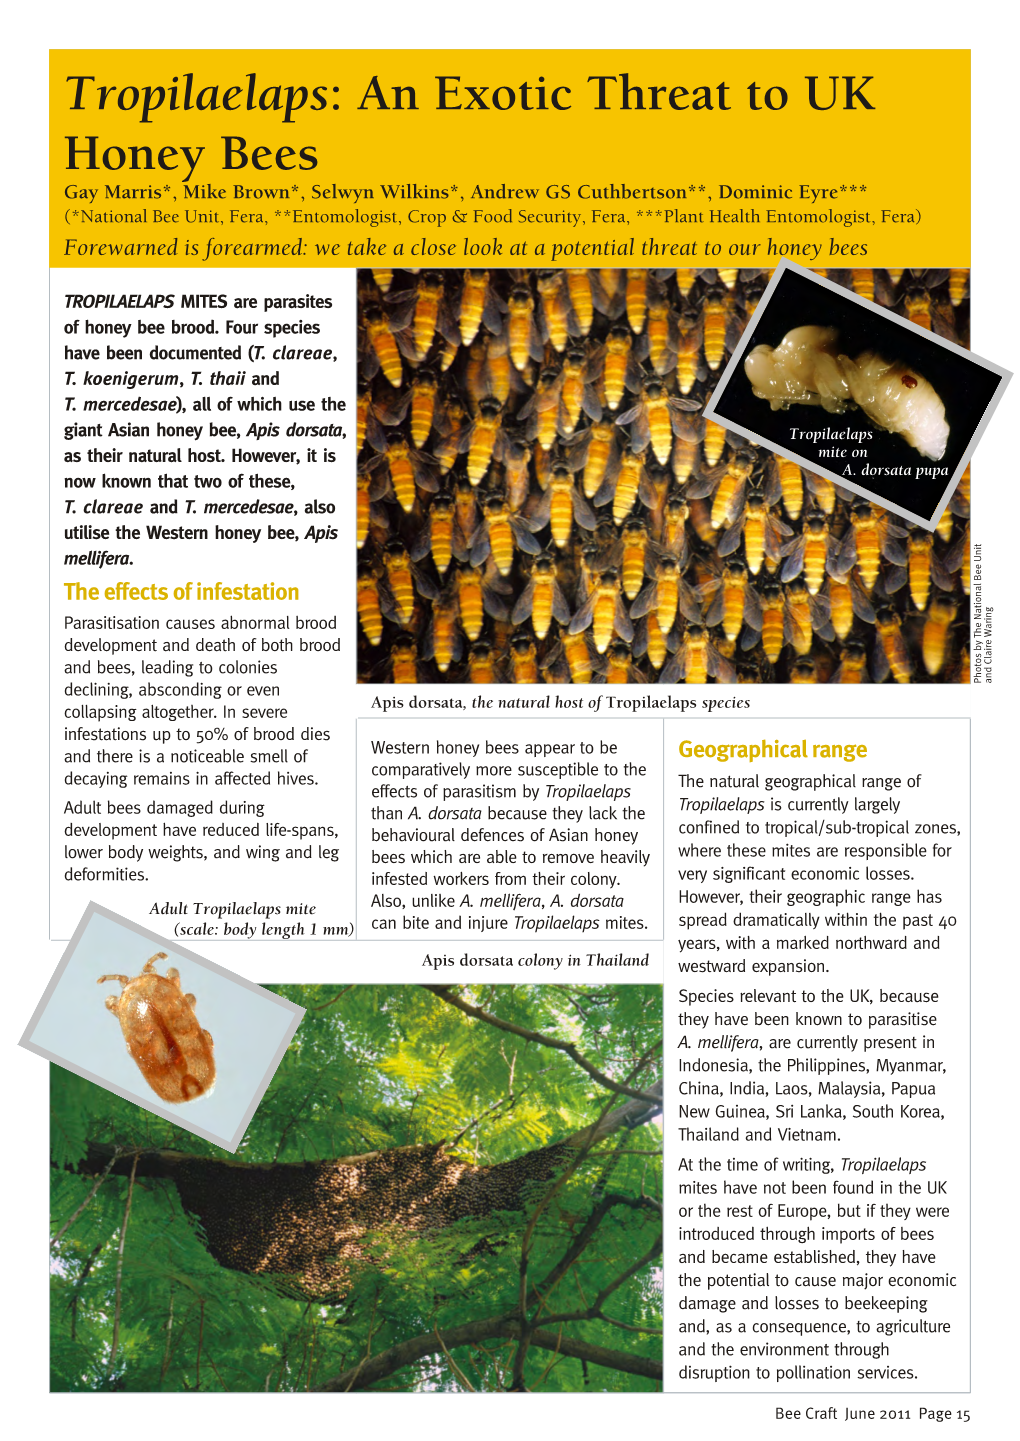 Tropilaelaps: an Exotic Threat to UK Honey Bees